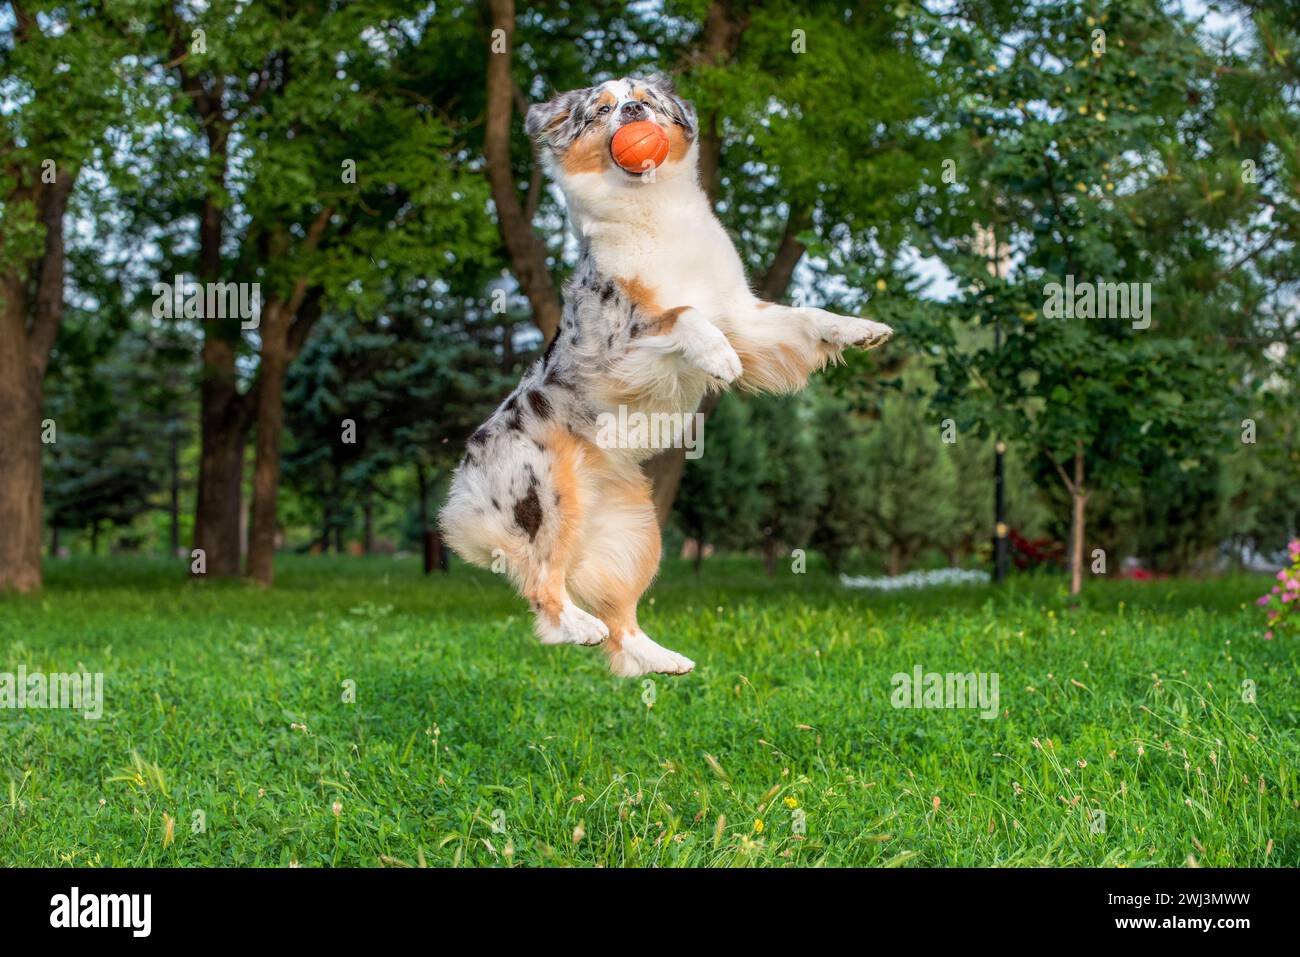 Australian shepherd dog plays with an orange ball in the air Stock Photo